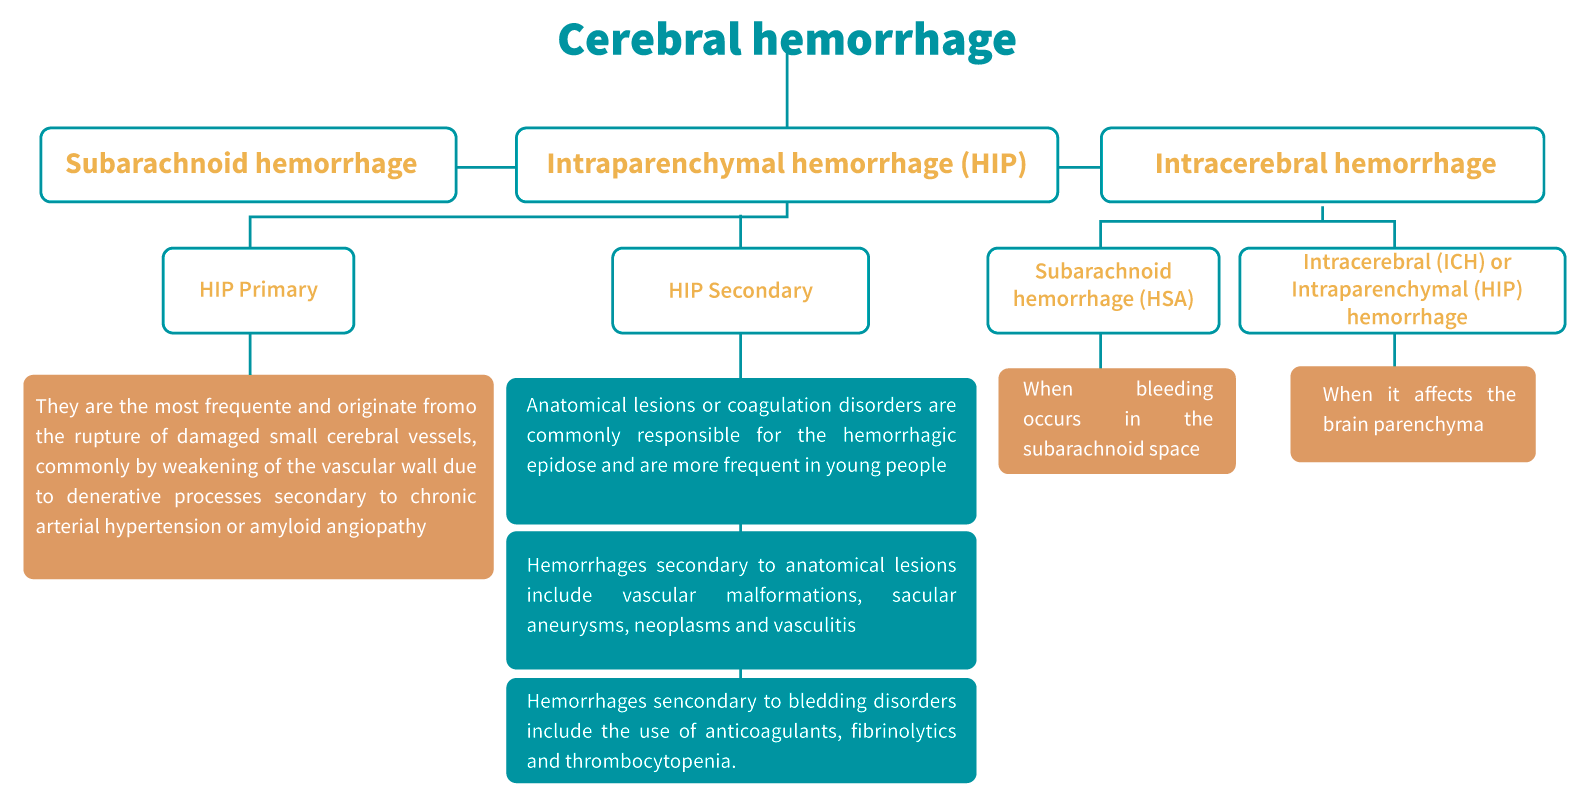 Classification of cerebral hemorrhage (Barinagarrementeria & Cantú, 2003)